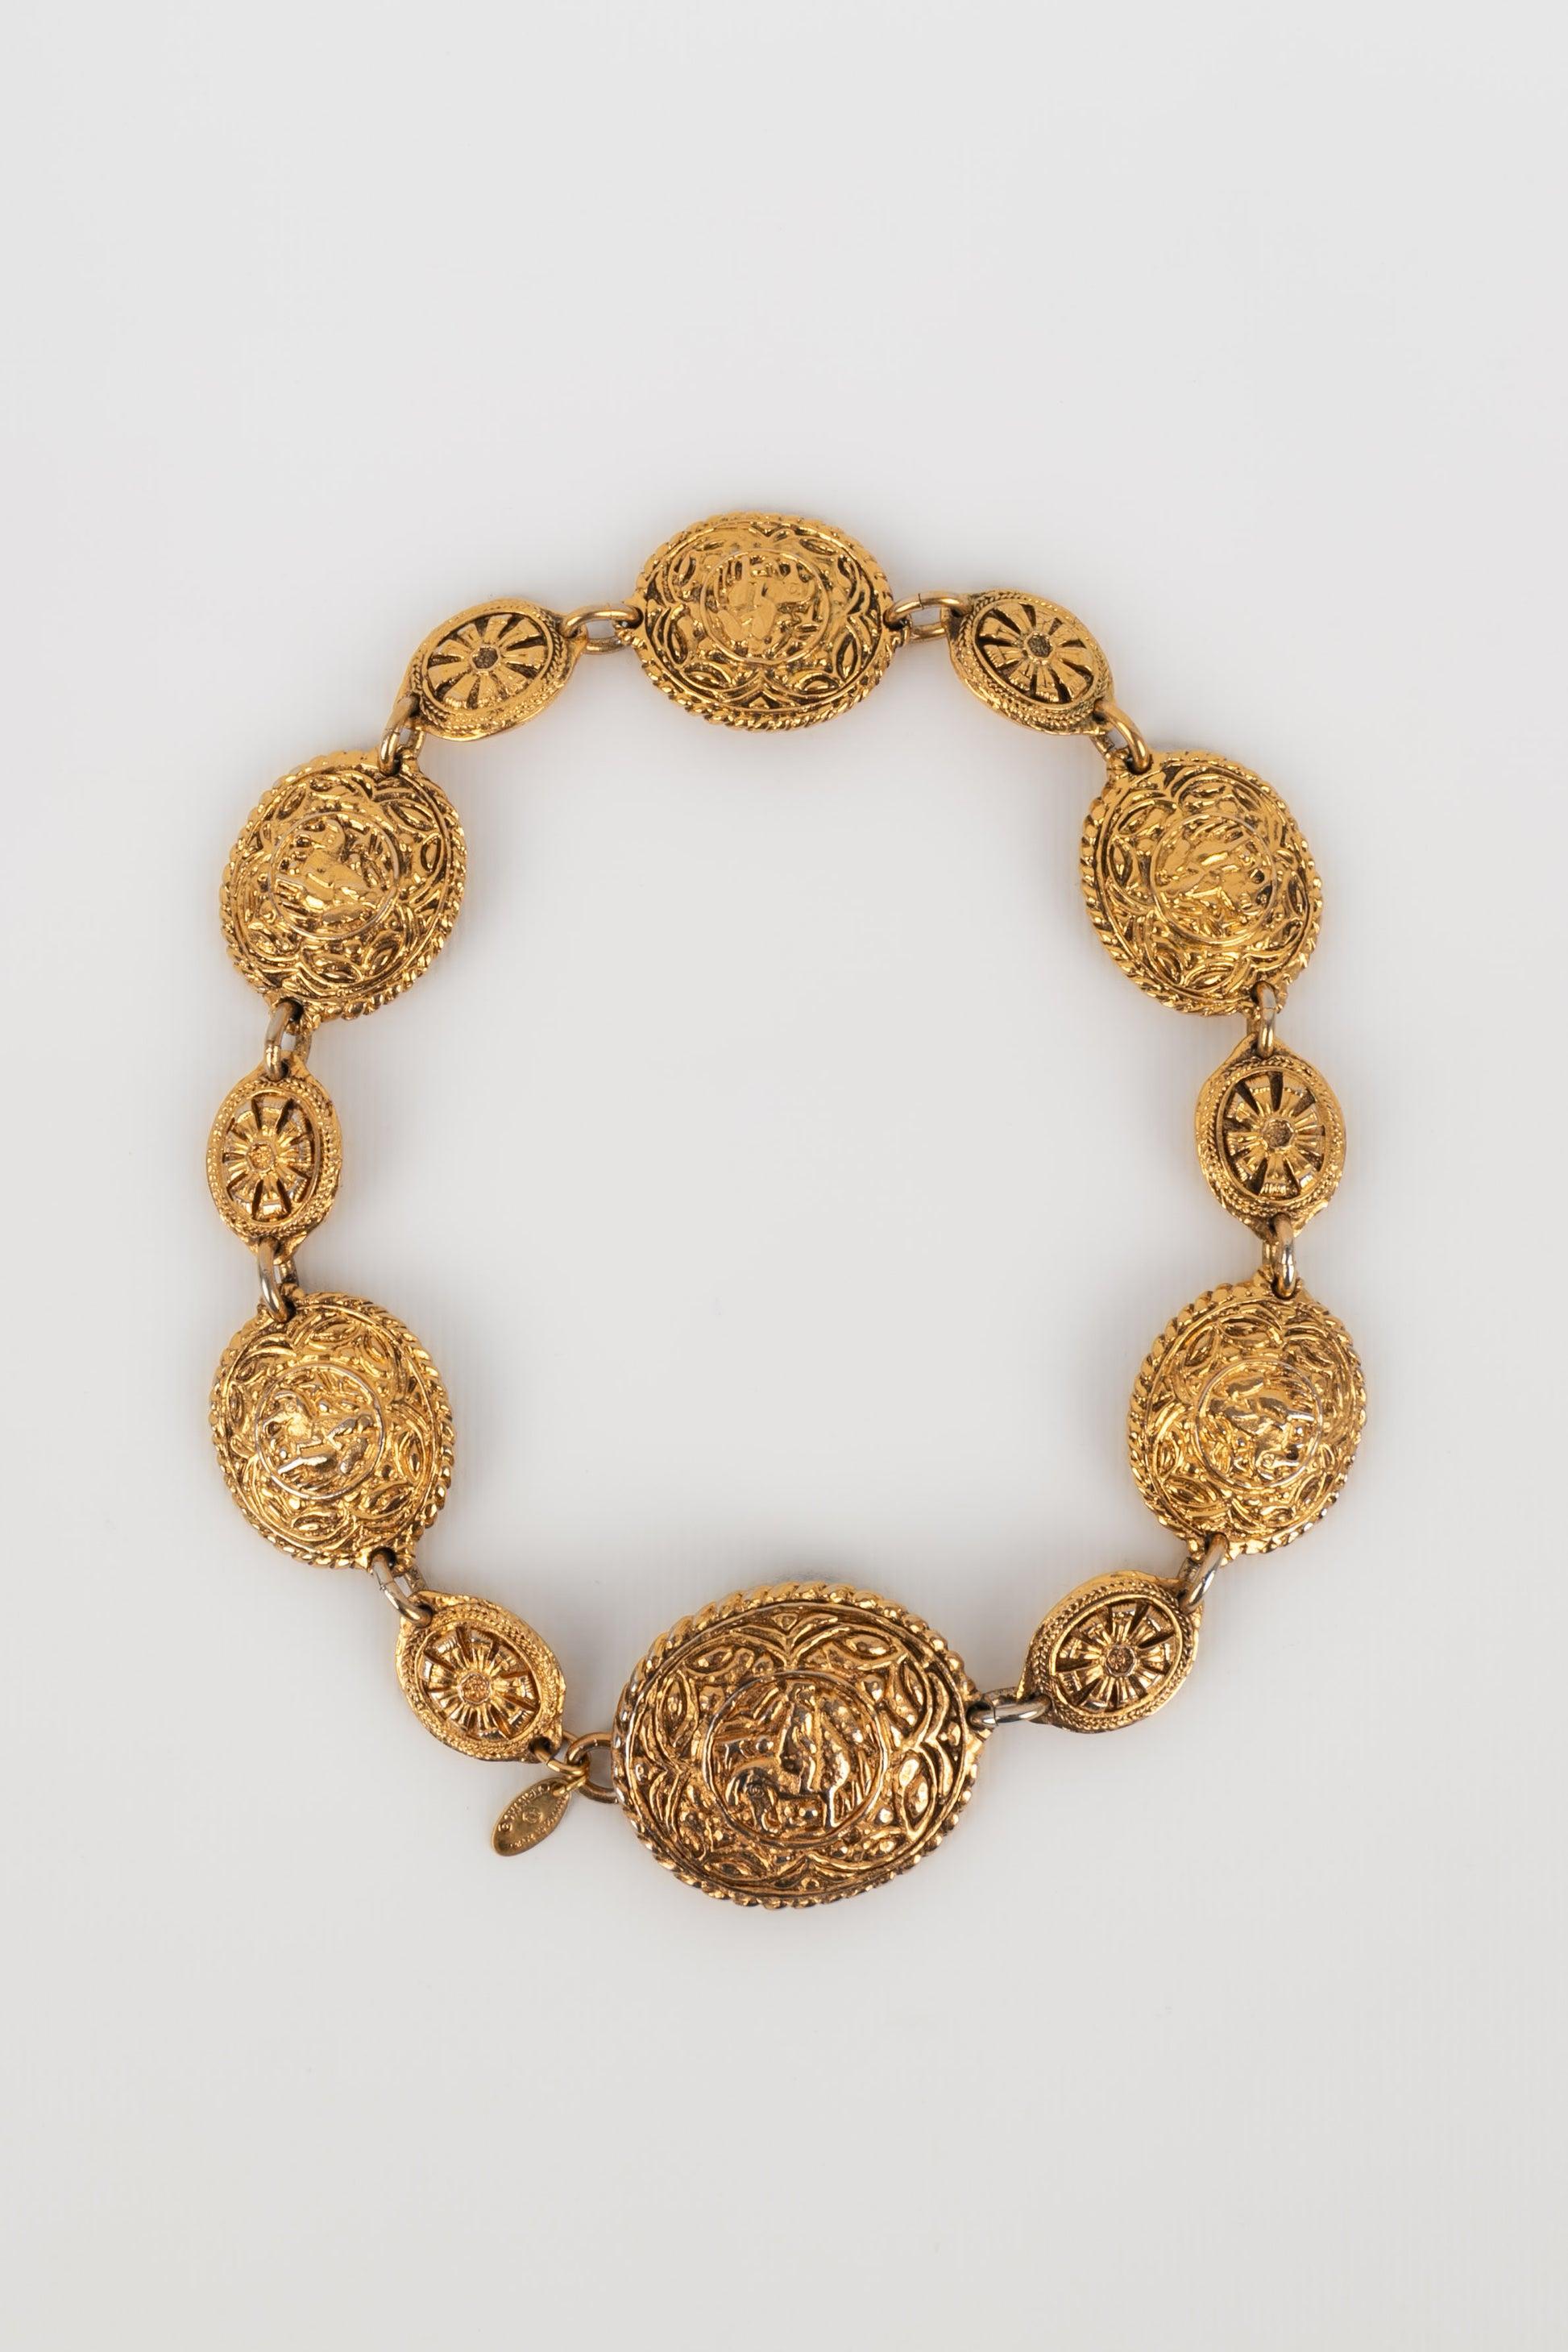 Chanel Golden Short Necklace, 1980s For Sale 1